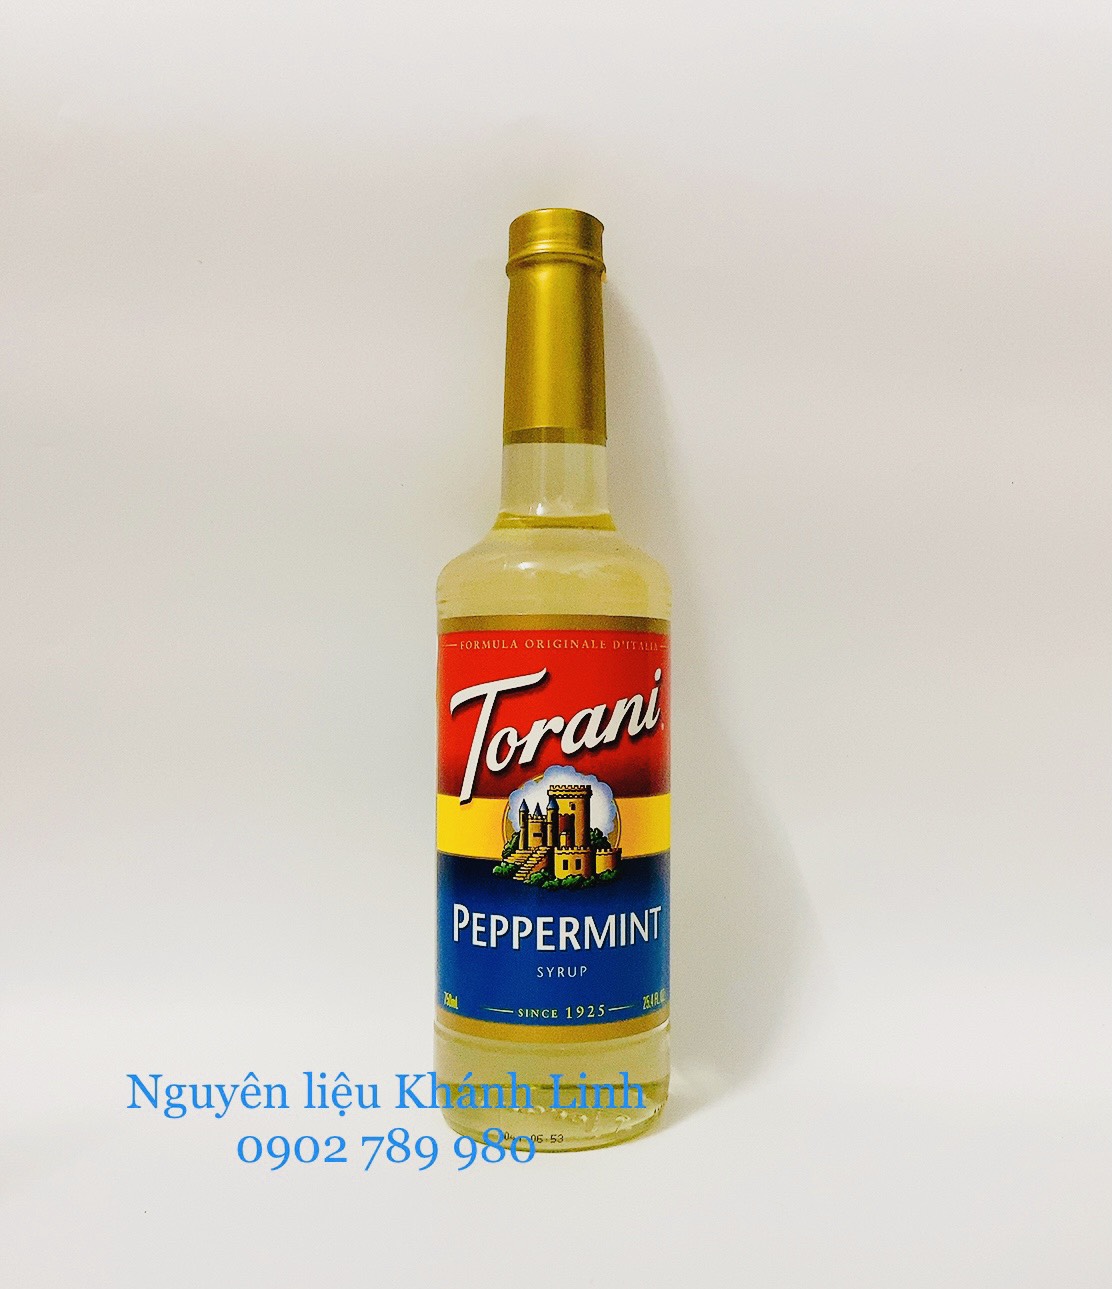 Syrup Pepper mint Torani